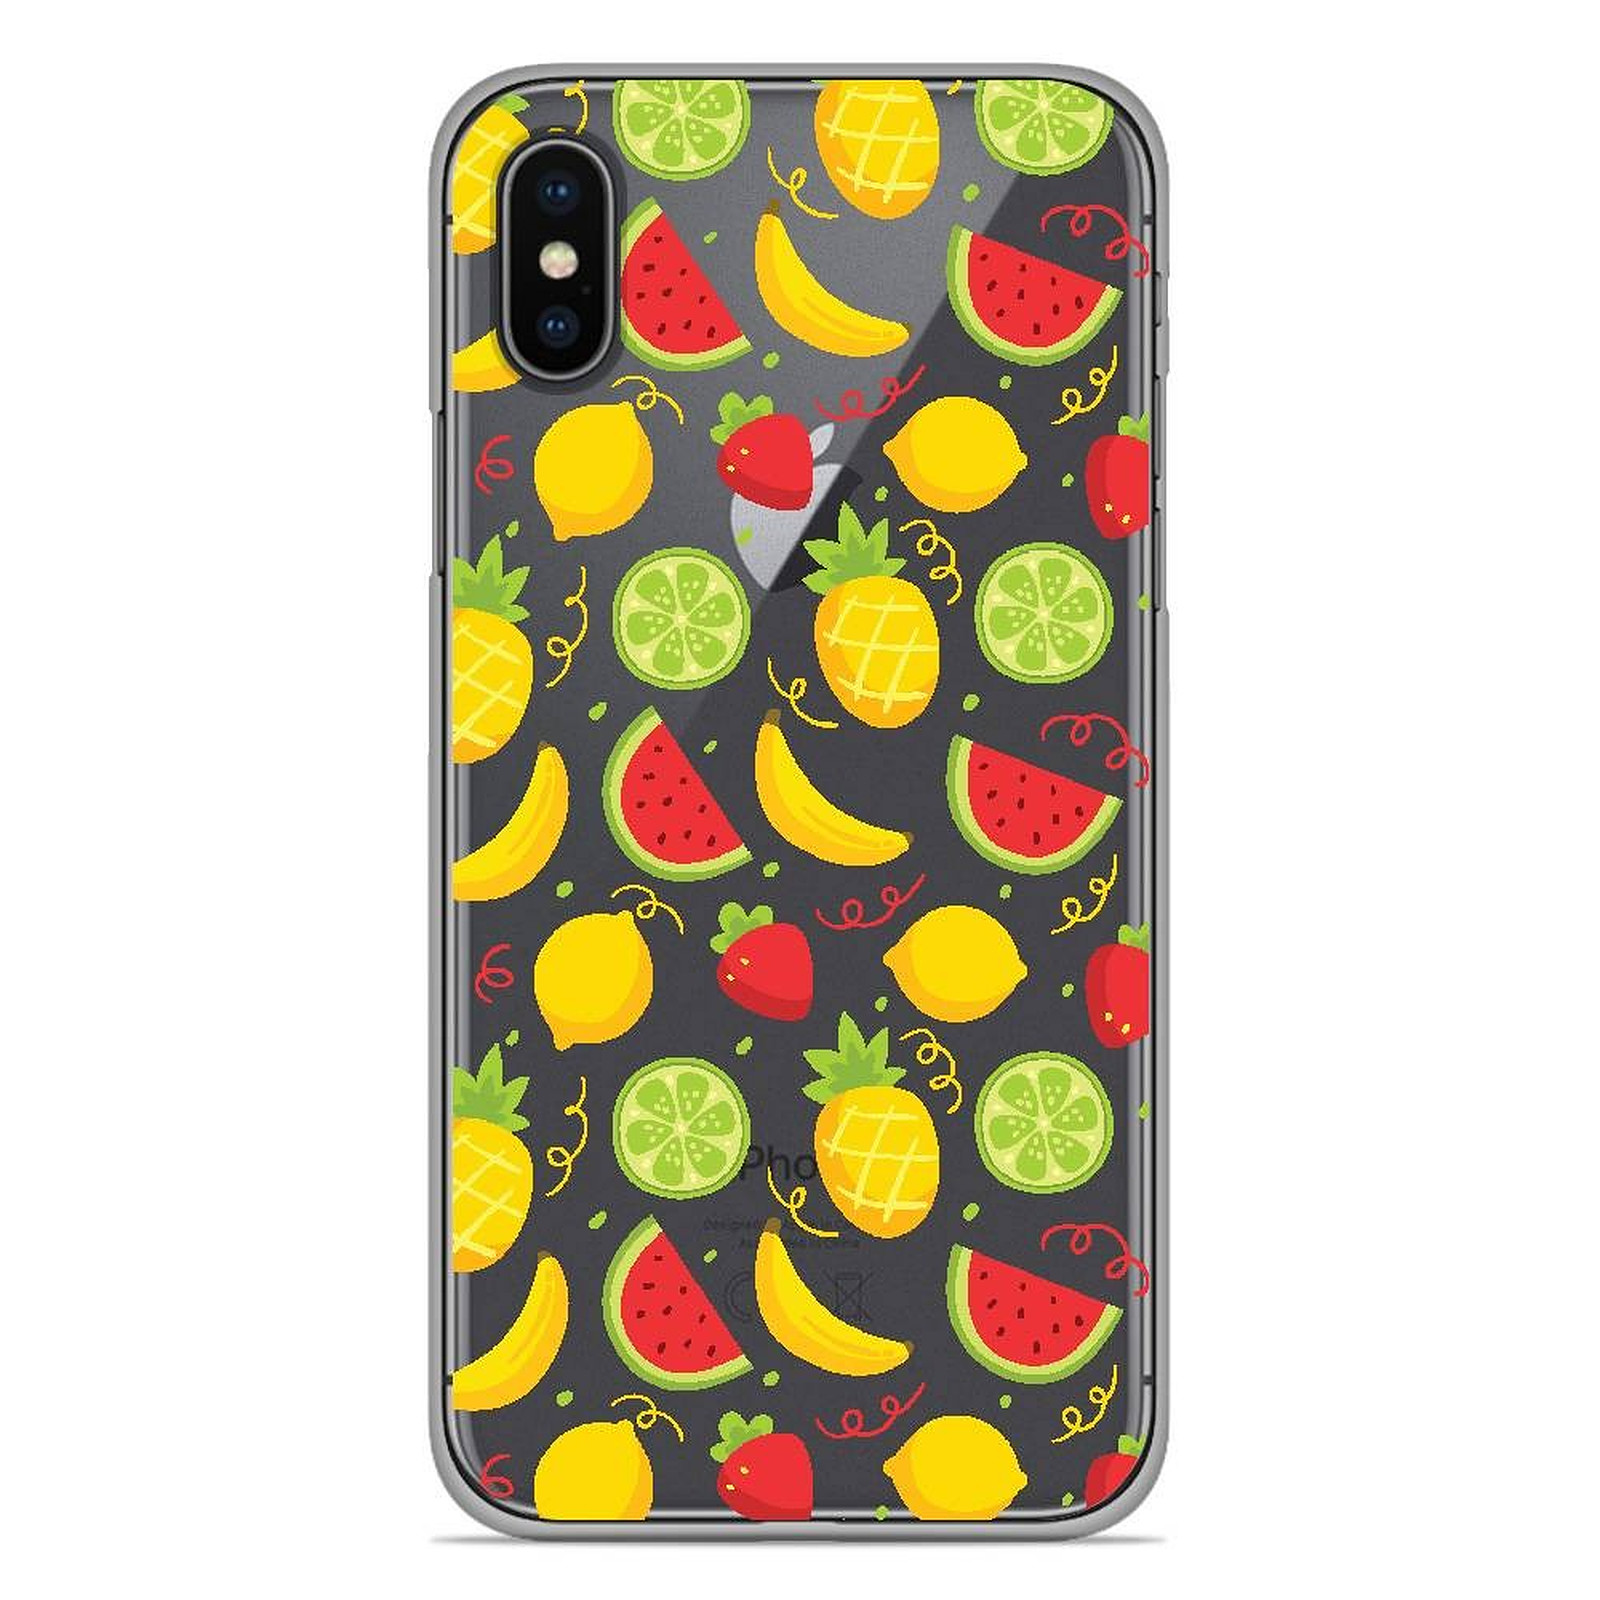 1001 Coques Coque silicone gel Apple iPhone X / XS motif Fruits tropicaux - Coque telephone 1001Coques